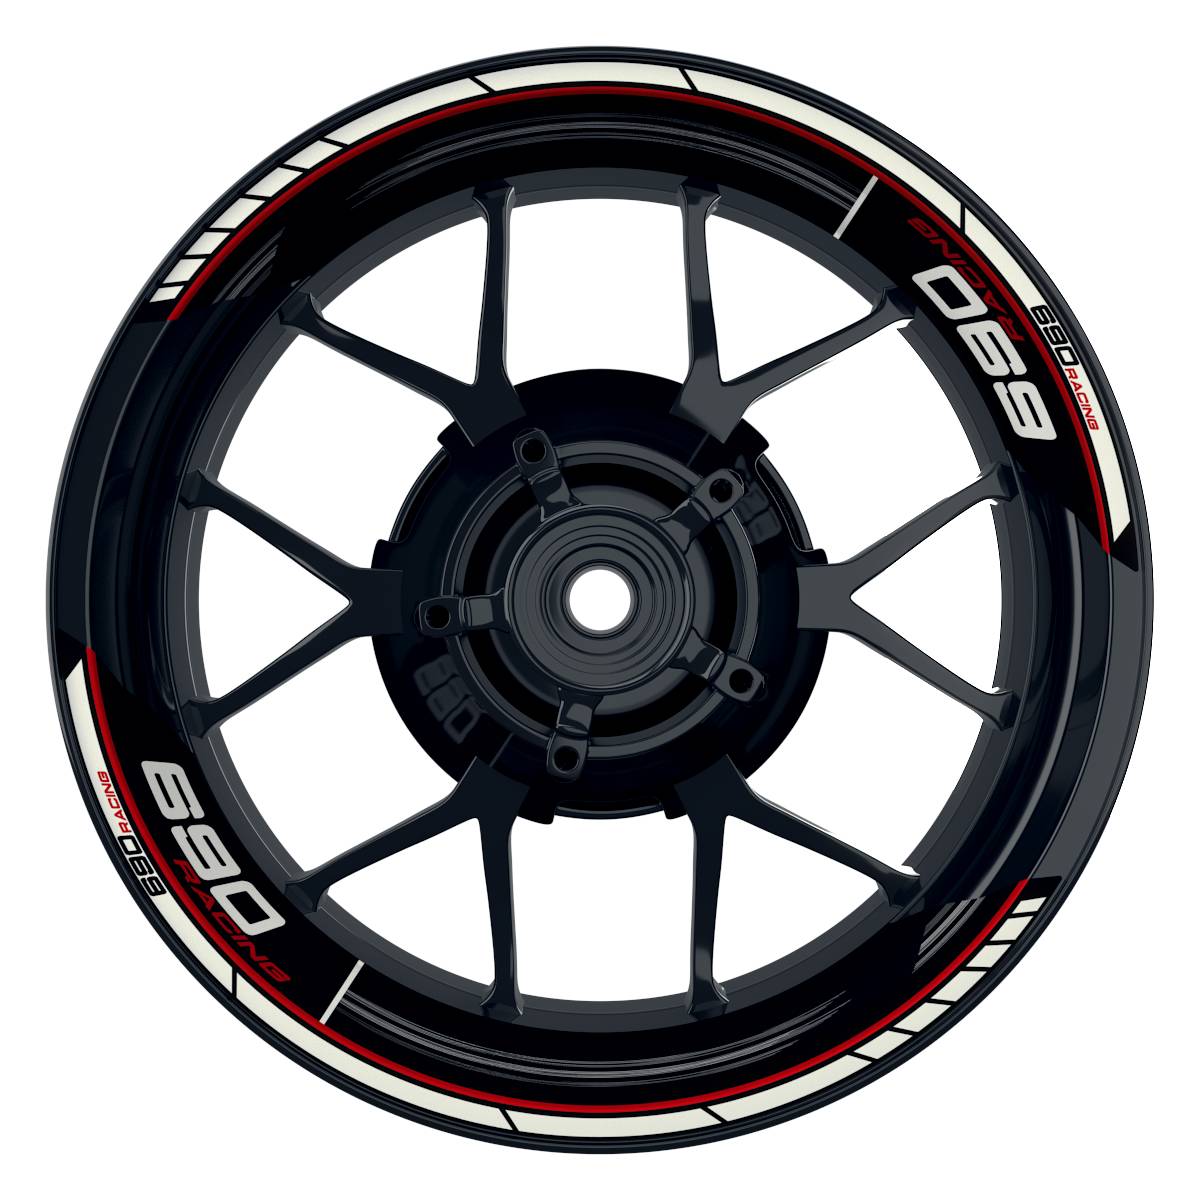 KTM Racing 690 Scratched schwarz rot Frontansicht